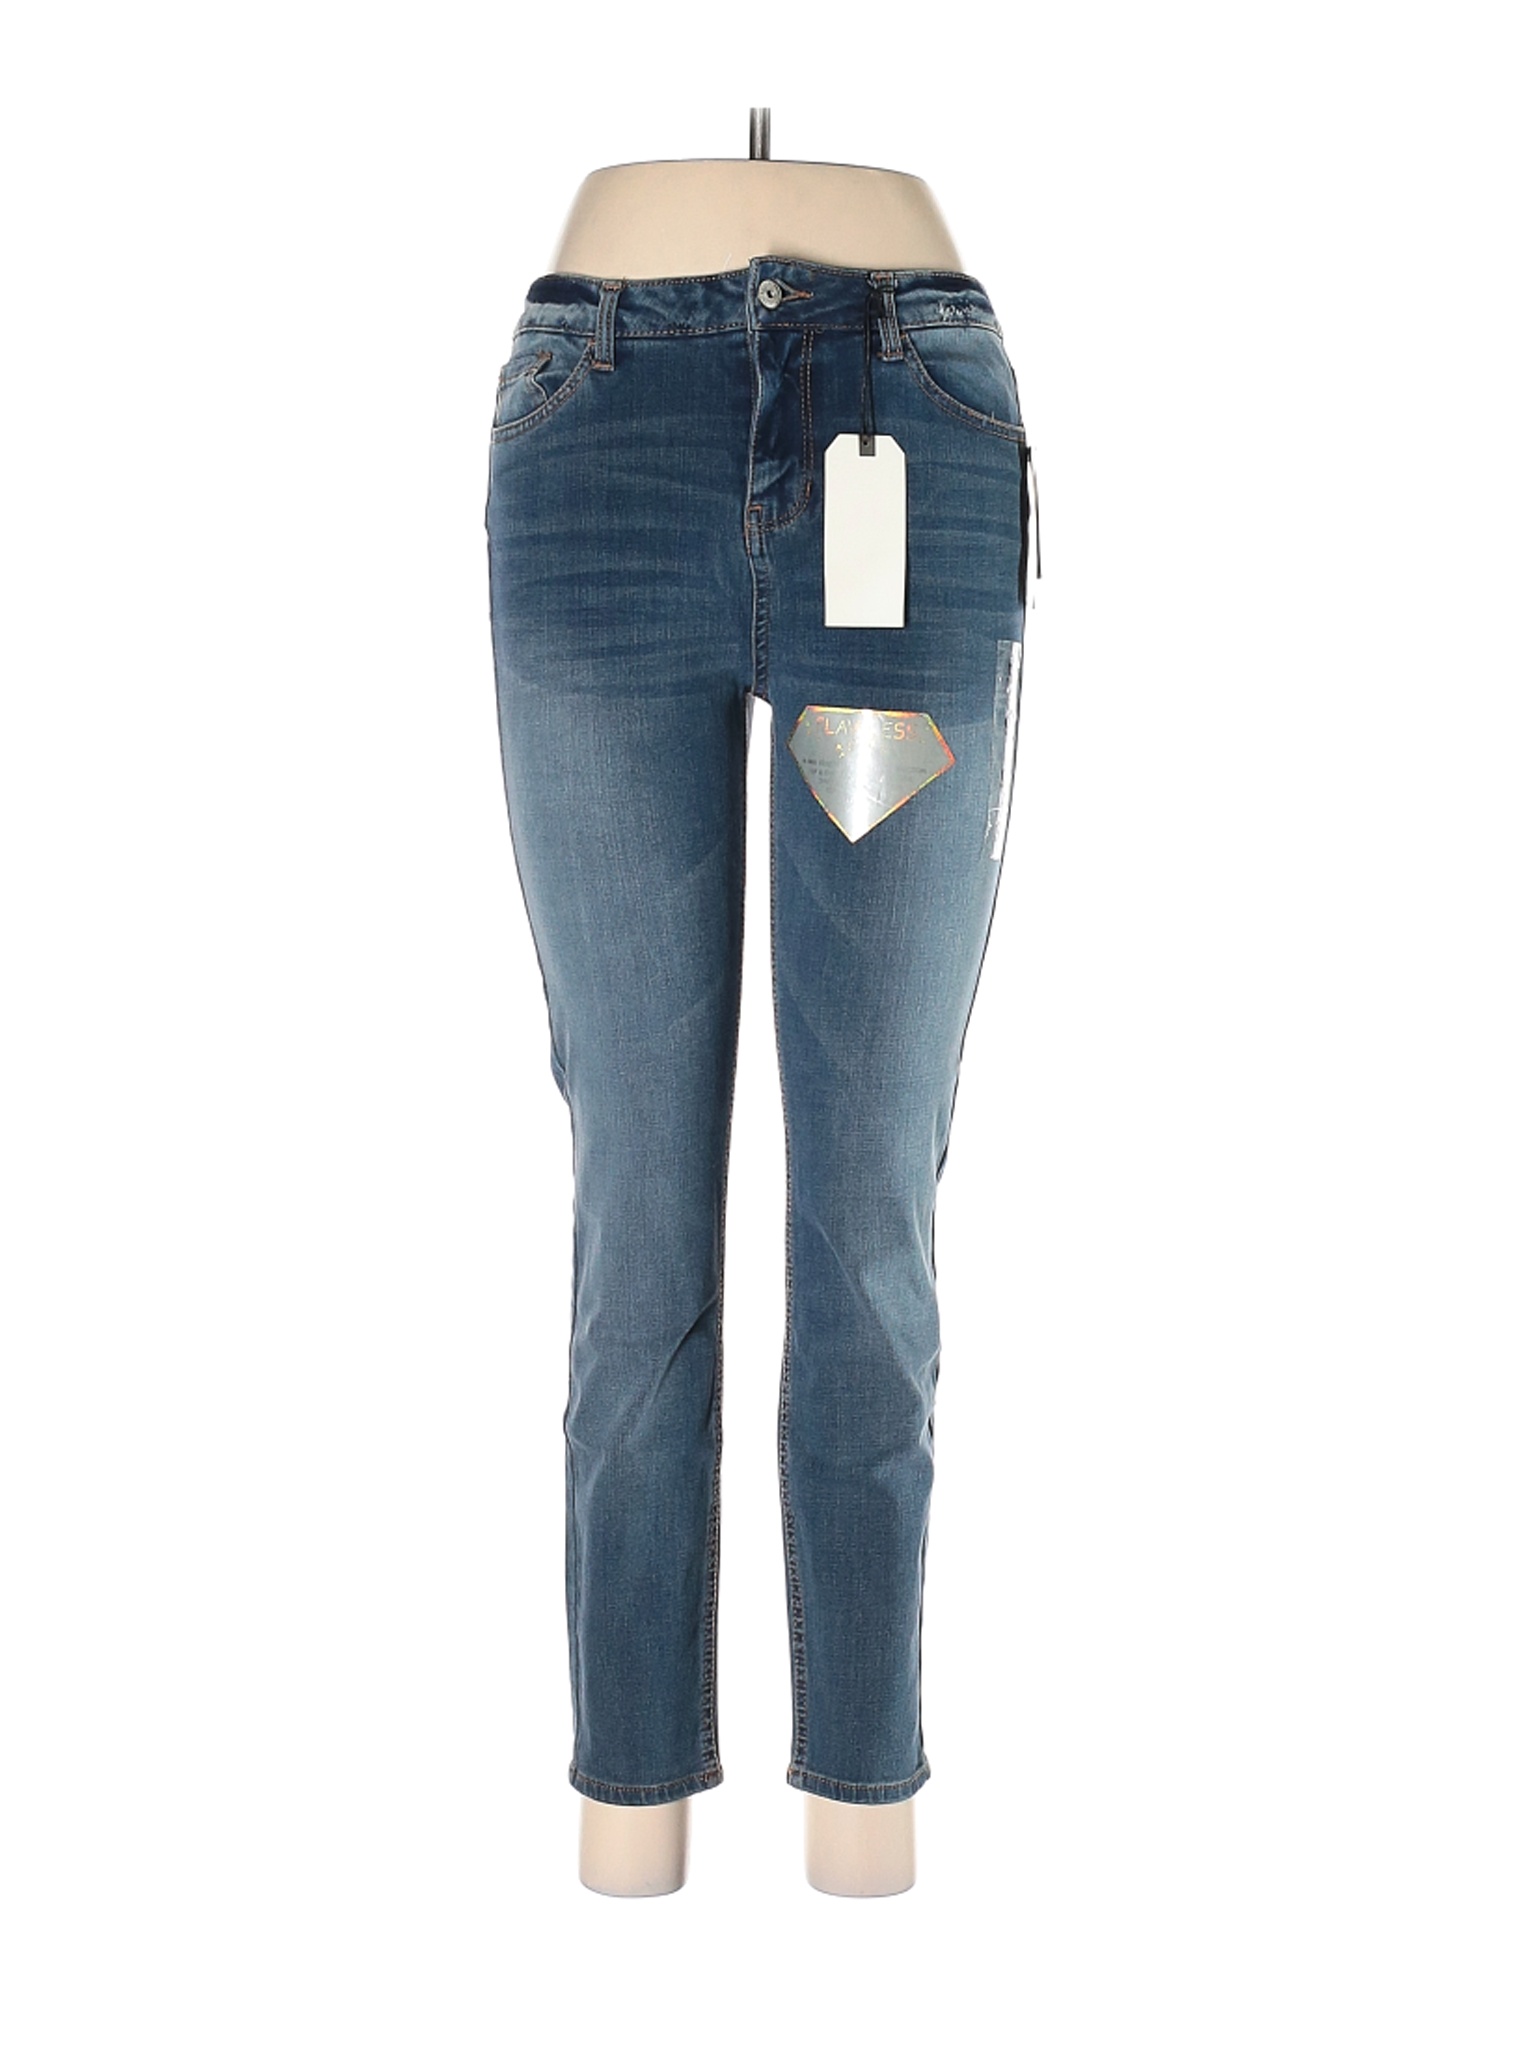 NWT Vanilla Star Women Blue Jeans 9 | eBay